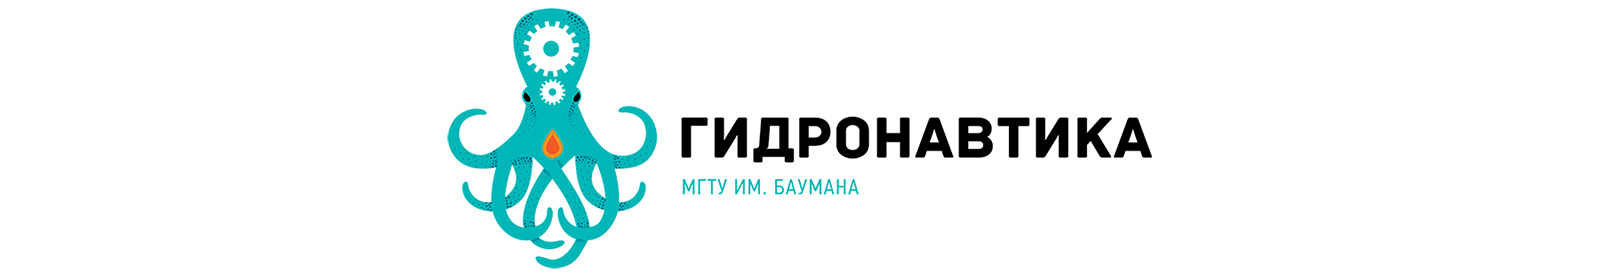 Gidronavtika_logo.jpg